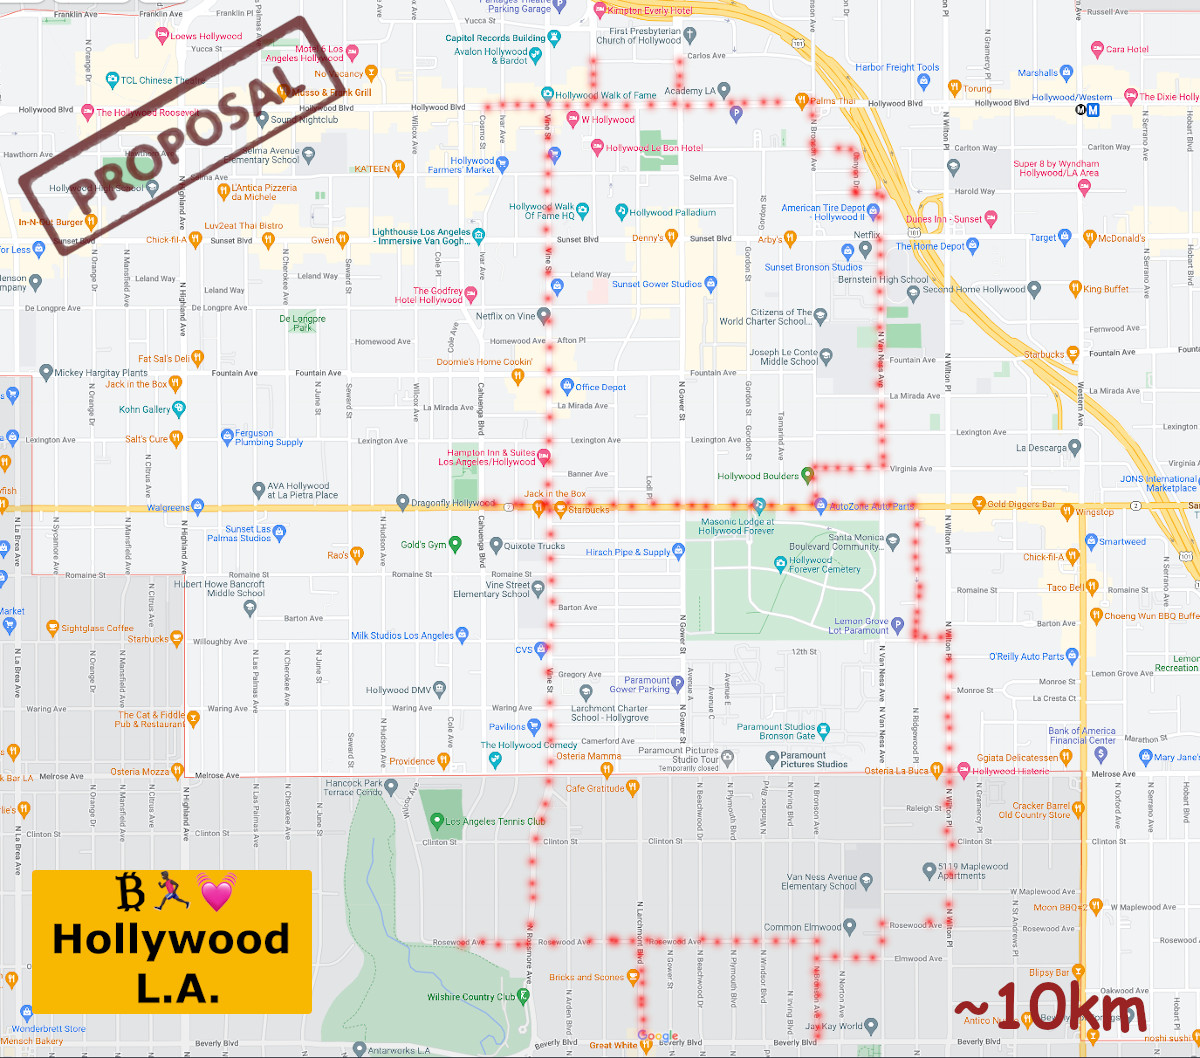 Hollywood L.A. Bitcoin Run Sketch